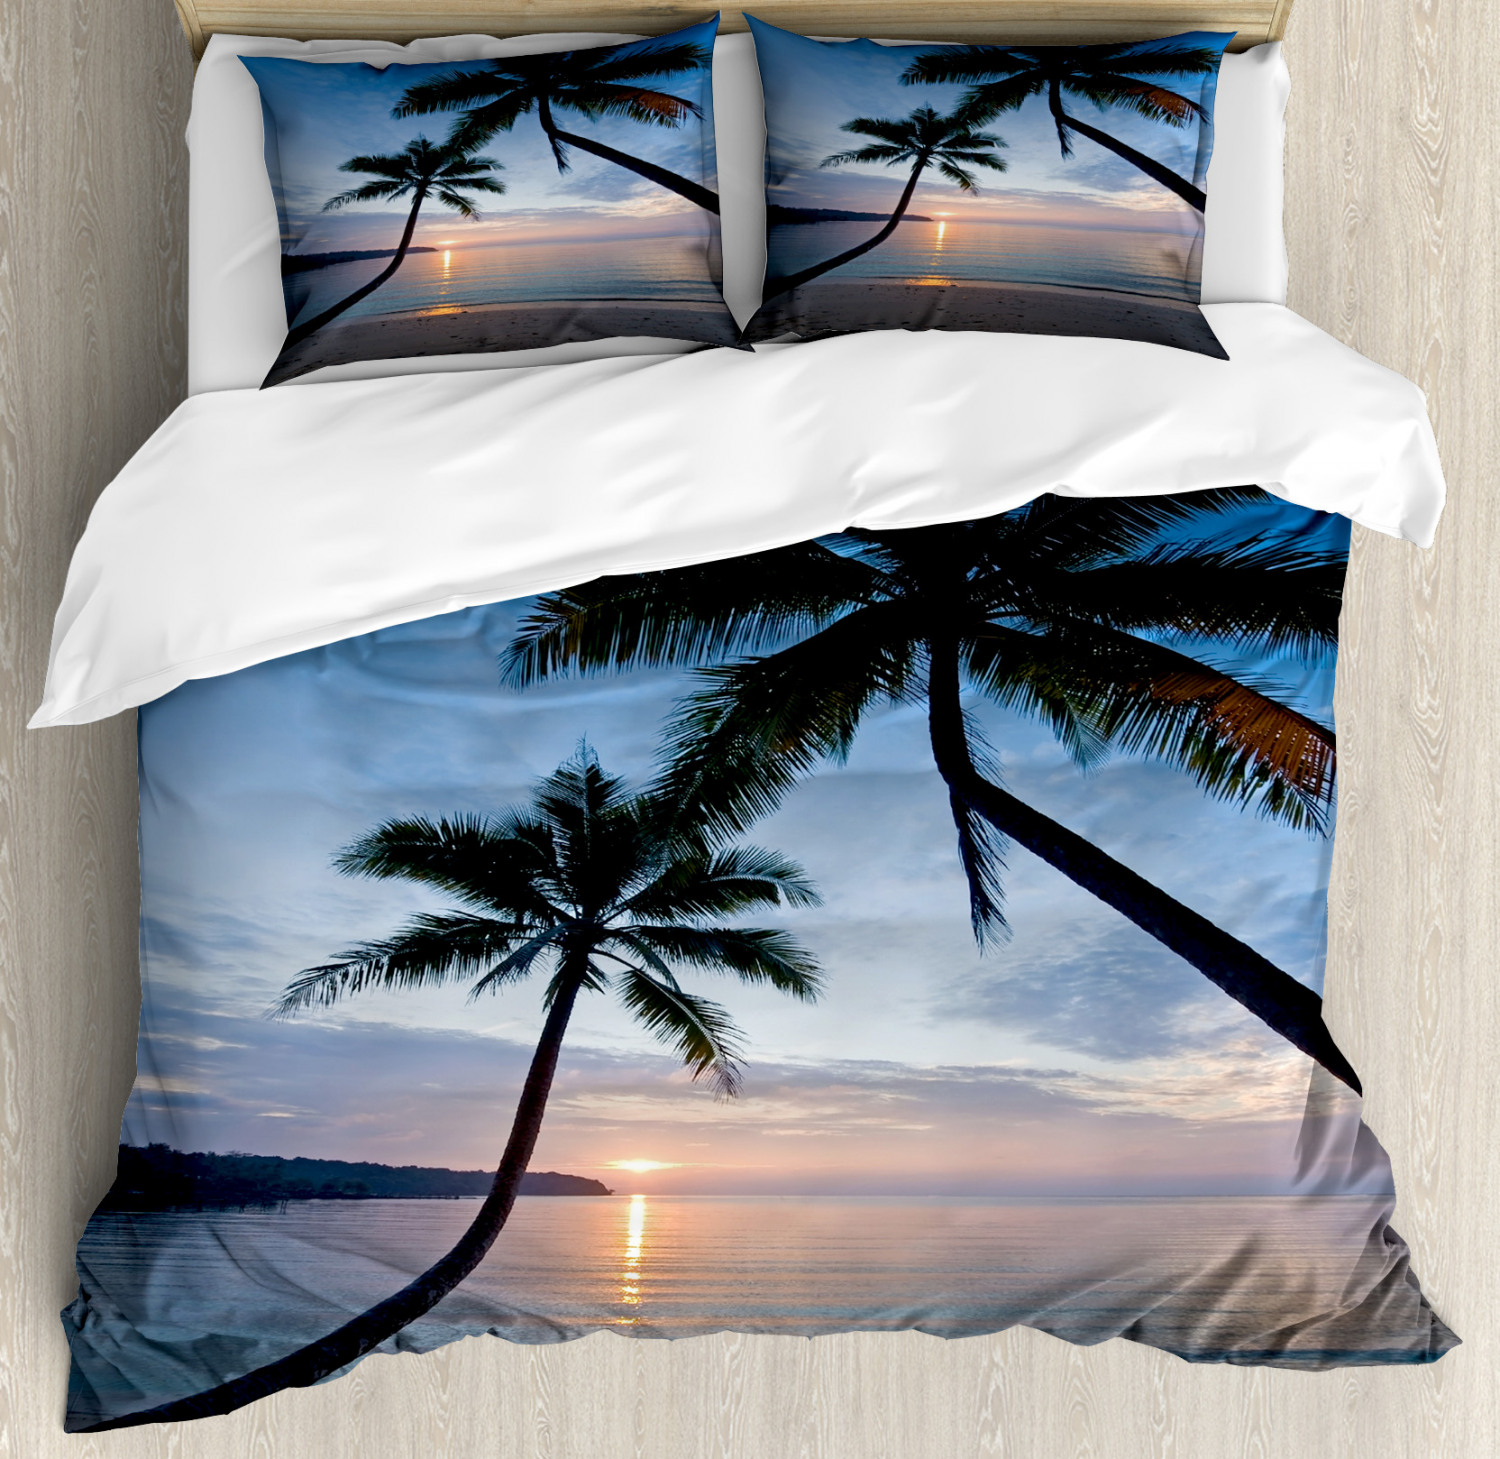 Tropical Duvet Cover Set With Pillow Shams Sunset Beach Thailand